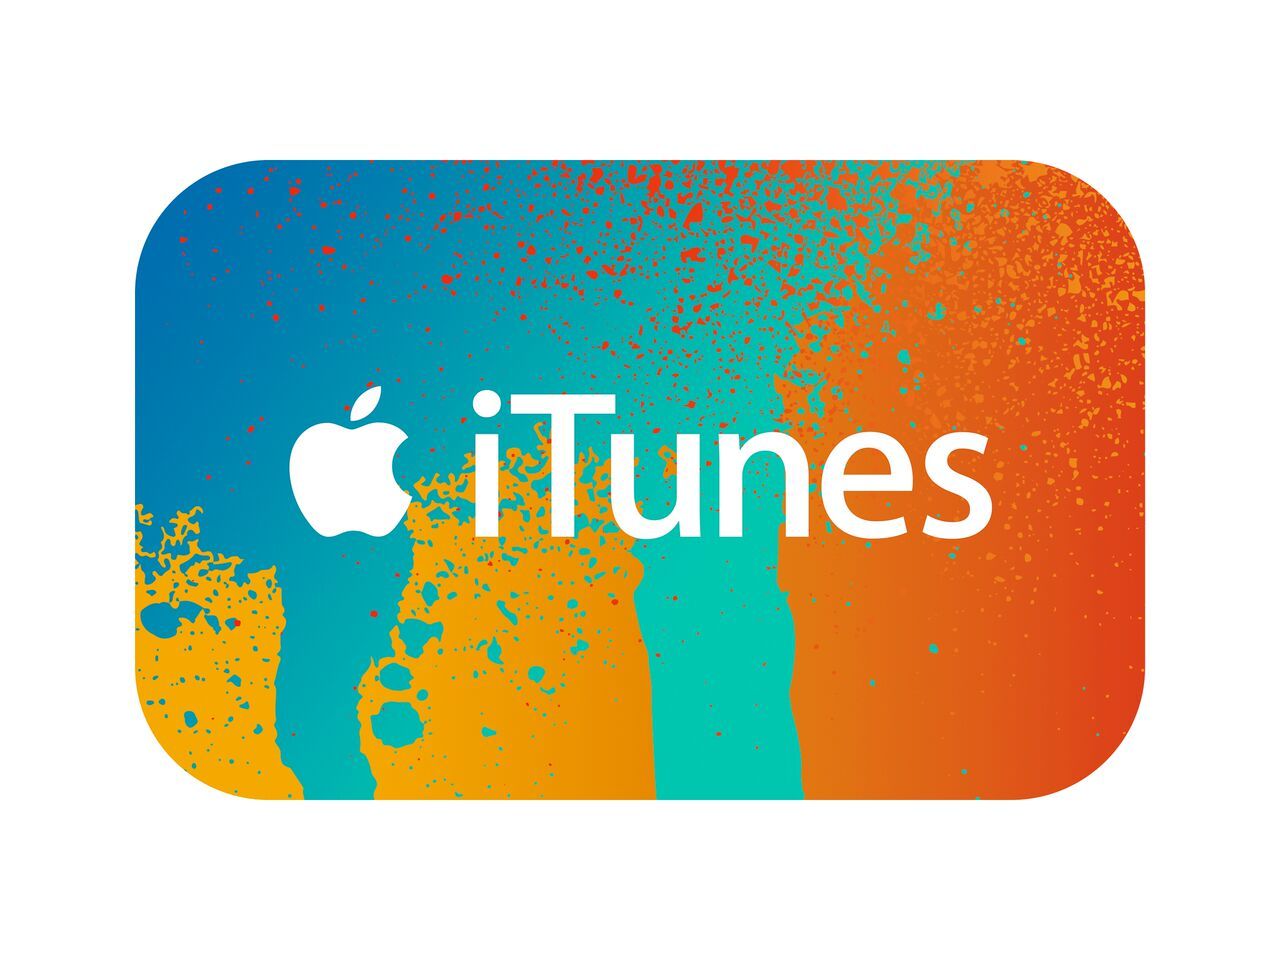 ⚡️ iTunes Gift Card (Russia) 5000r. Guarantees. PRICE✅